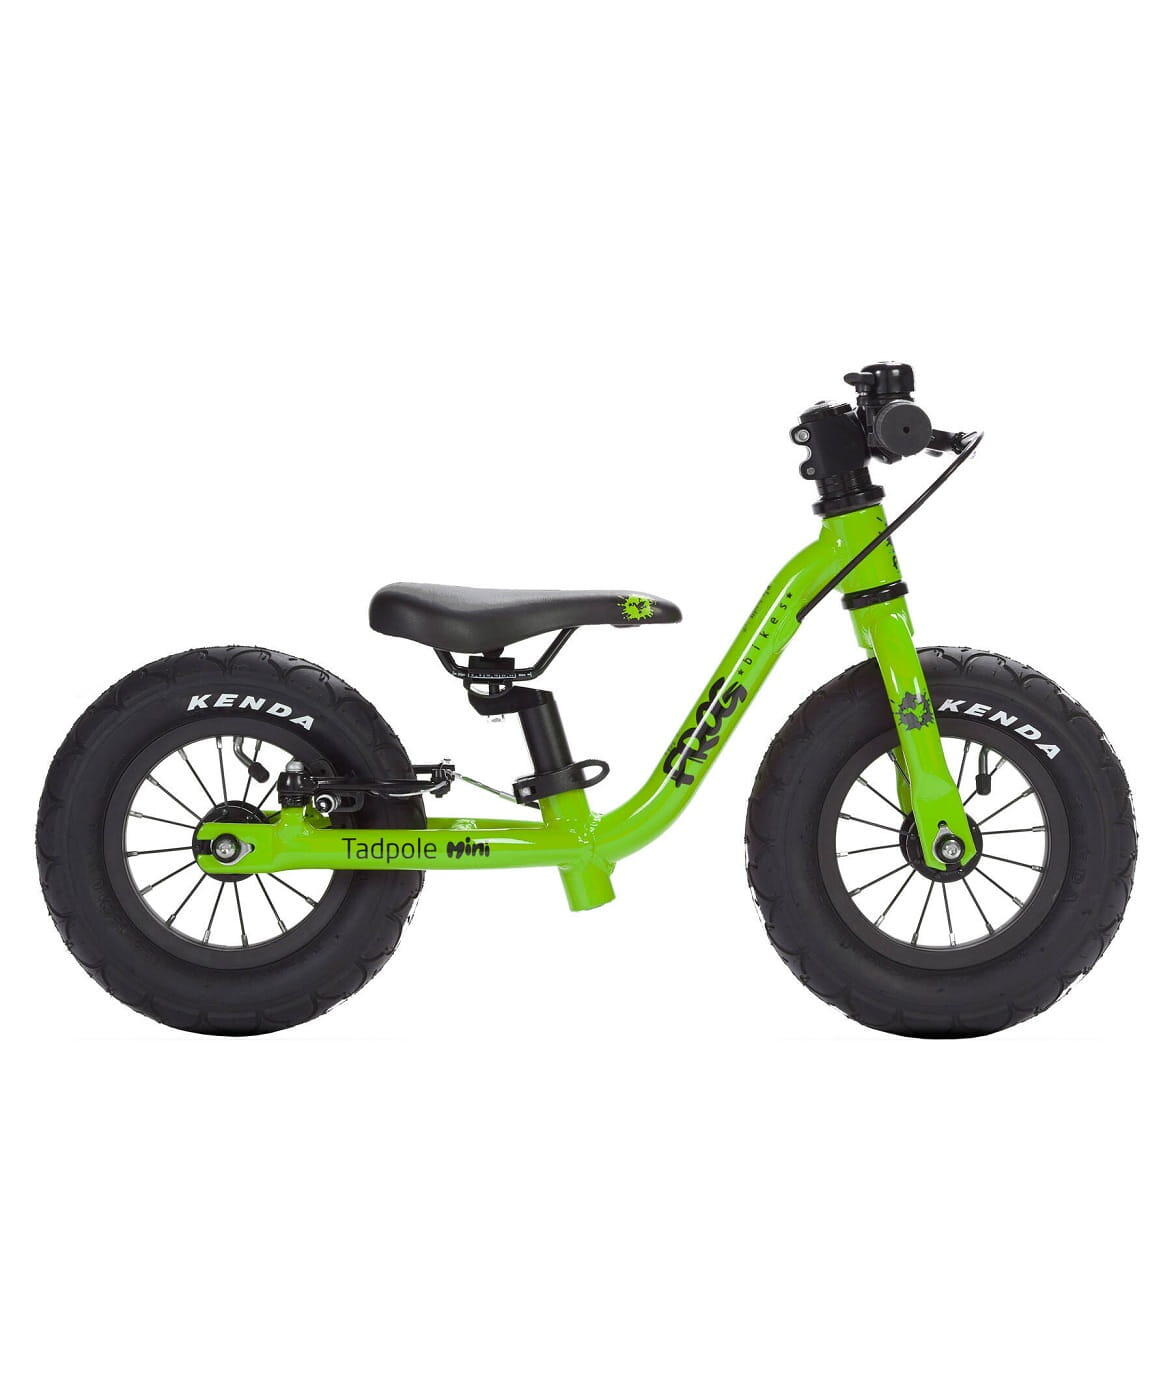 FROG BIKES Tadpole Mini 10 Inch Lightweight Kids Balance Bike For 18 Months-2 Years - Green